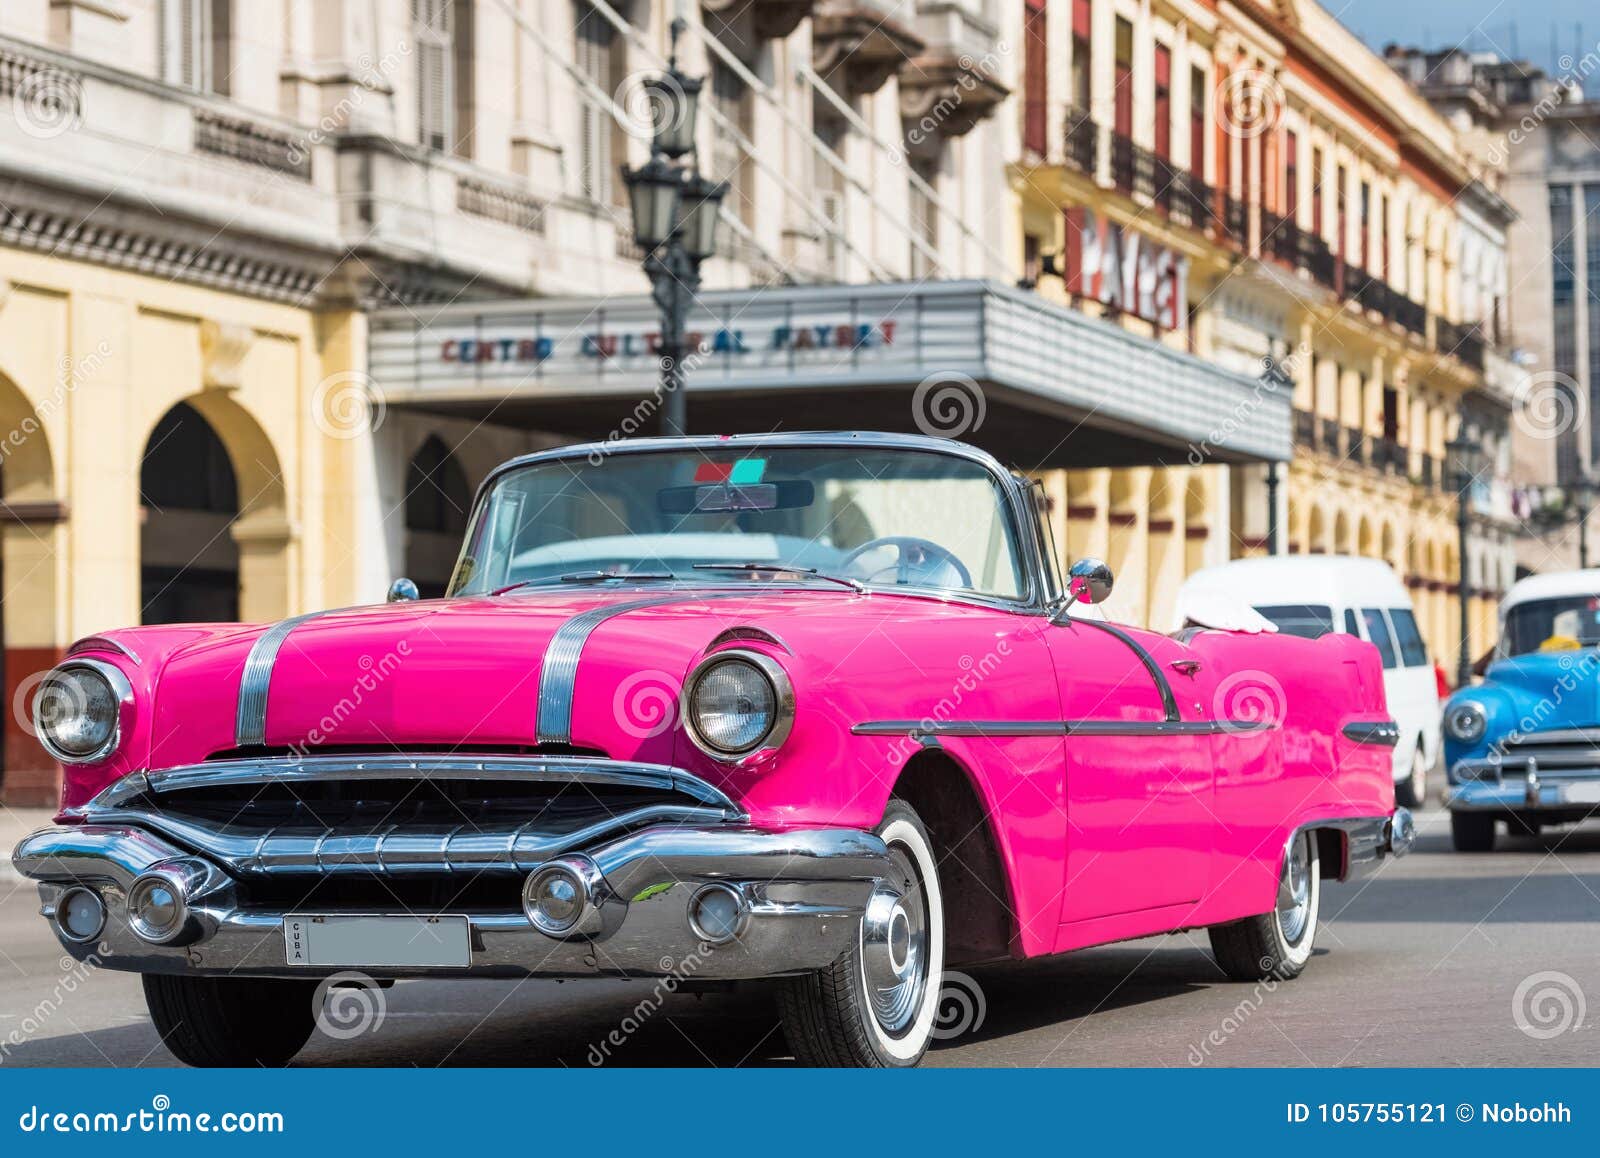 american pink convertible pontiac classic car drive with tourists through havana cuba - serie cuba reportage